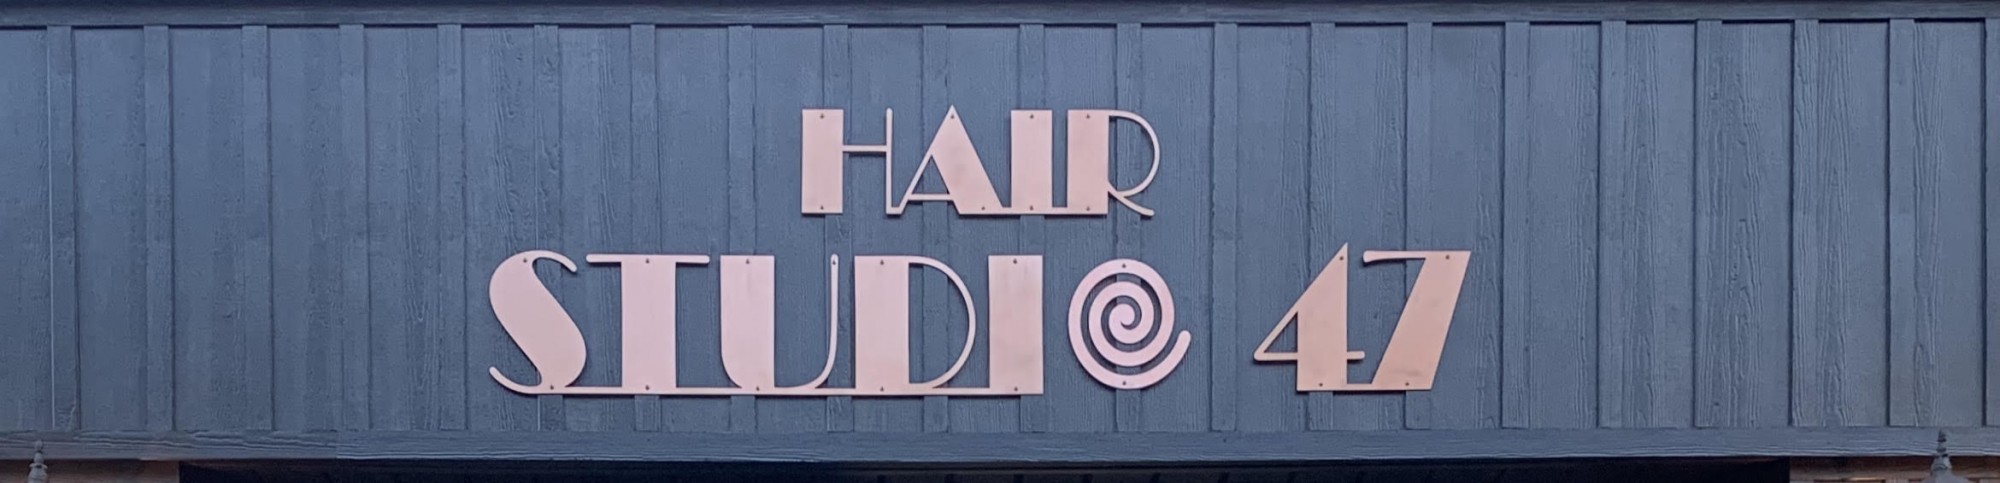 Hair Studio 47